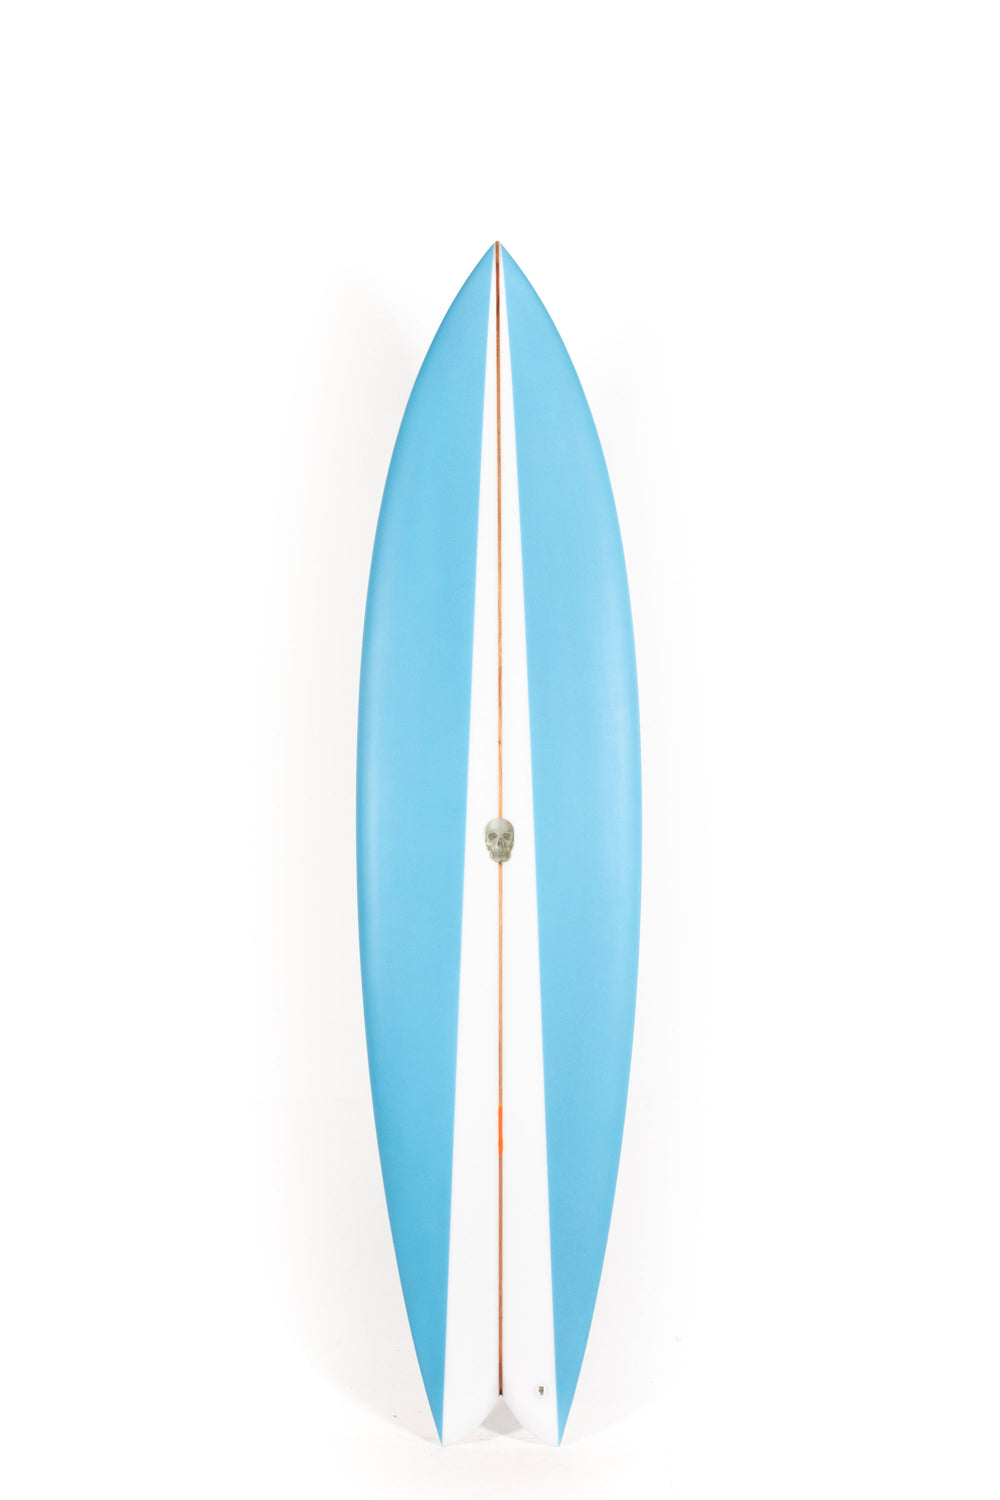 Pukas Surf Shop - Christenson Surfboards - NAUTILUS - 7'6